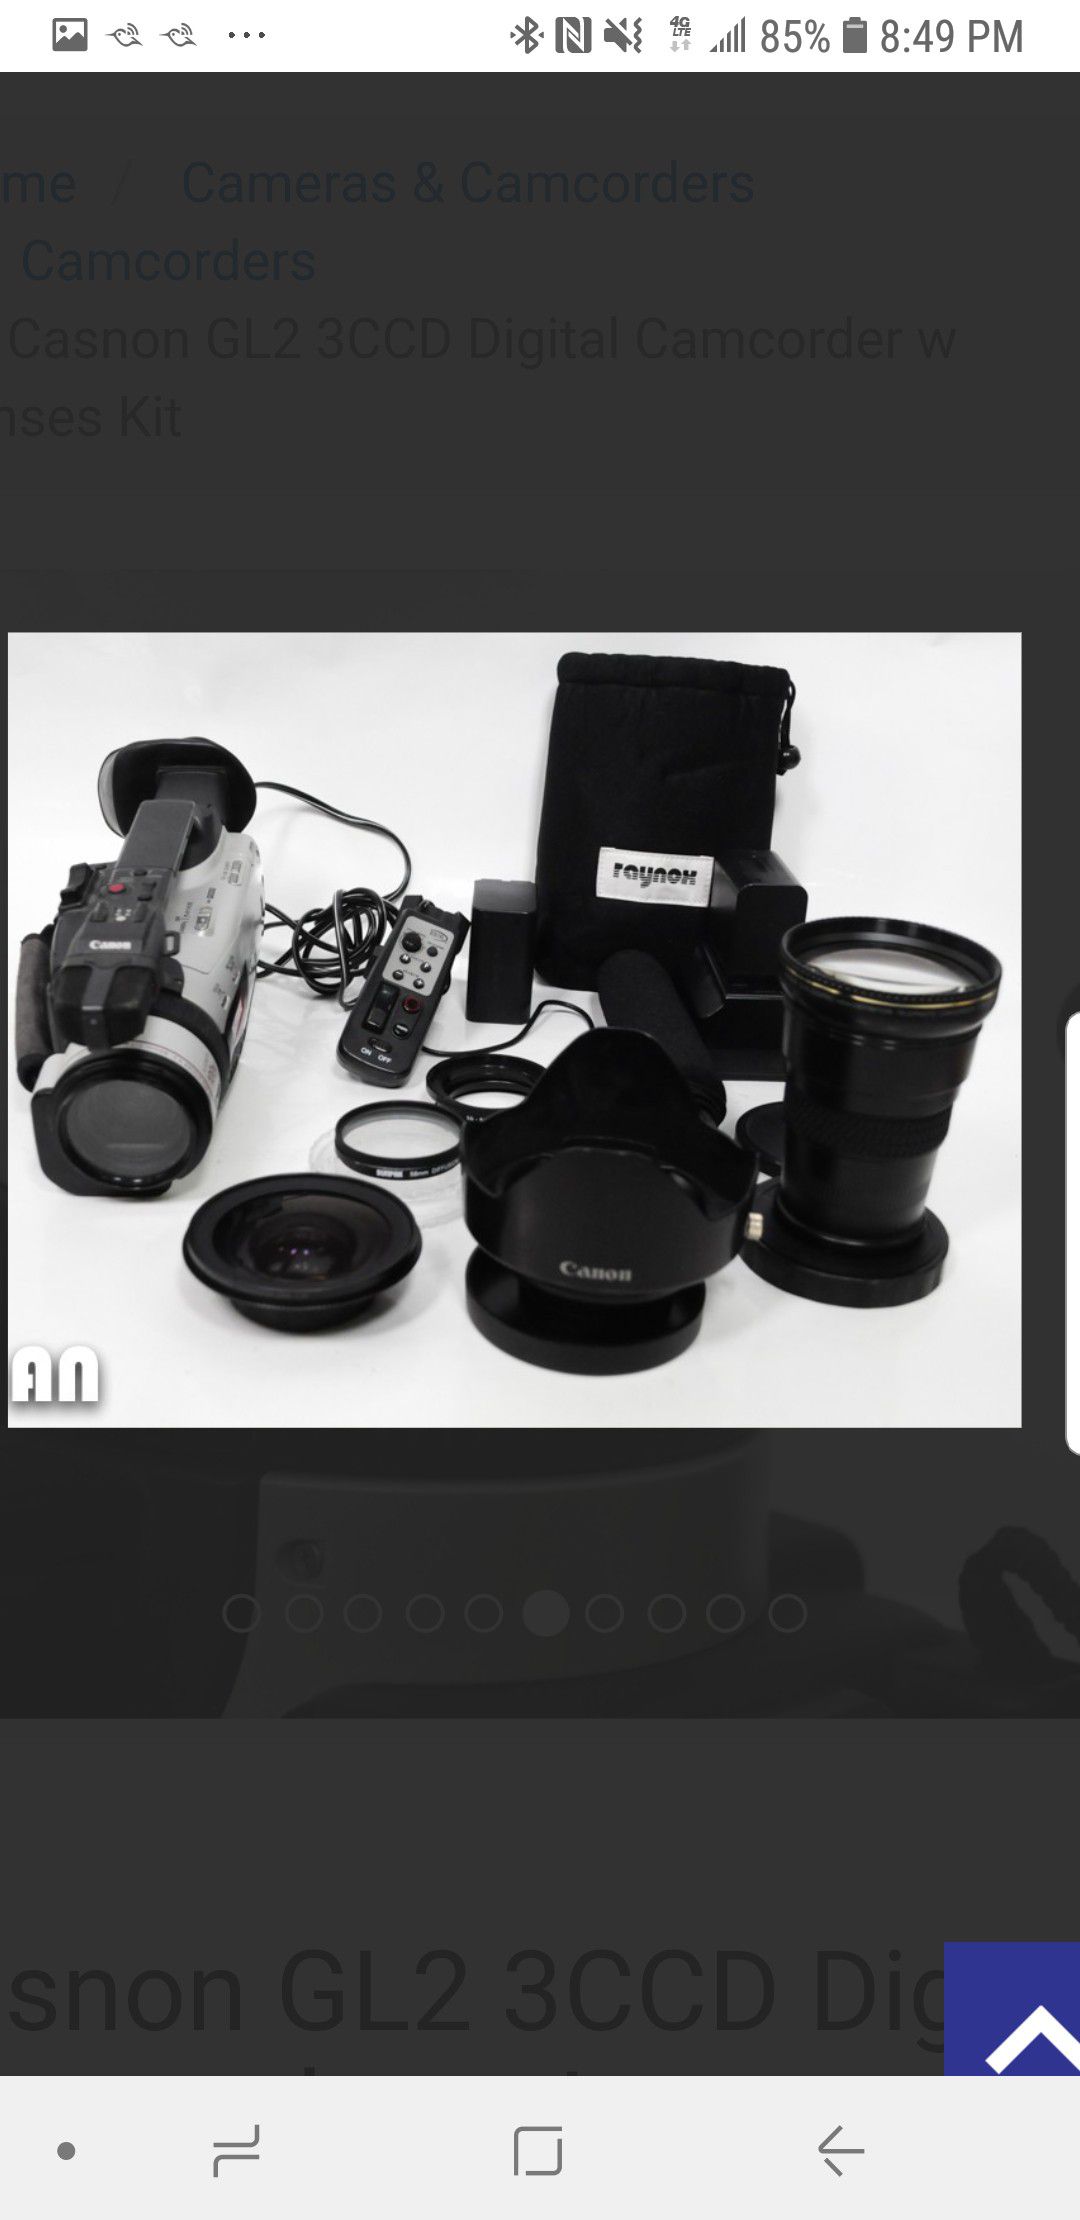 Canon GL2 3CCD Digital Camcorder w Lenses Kit